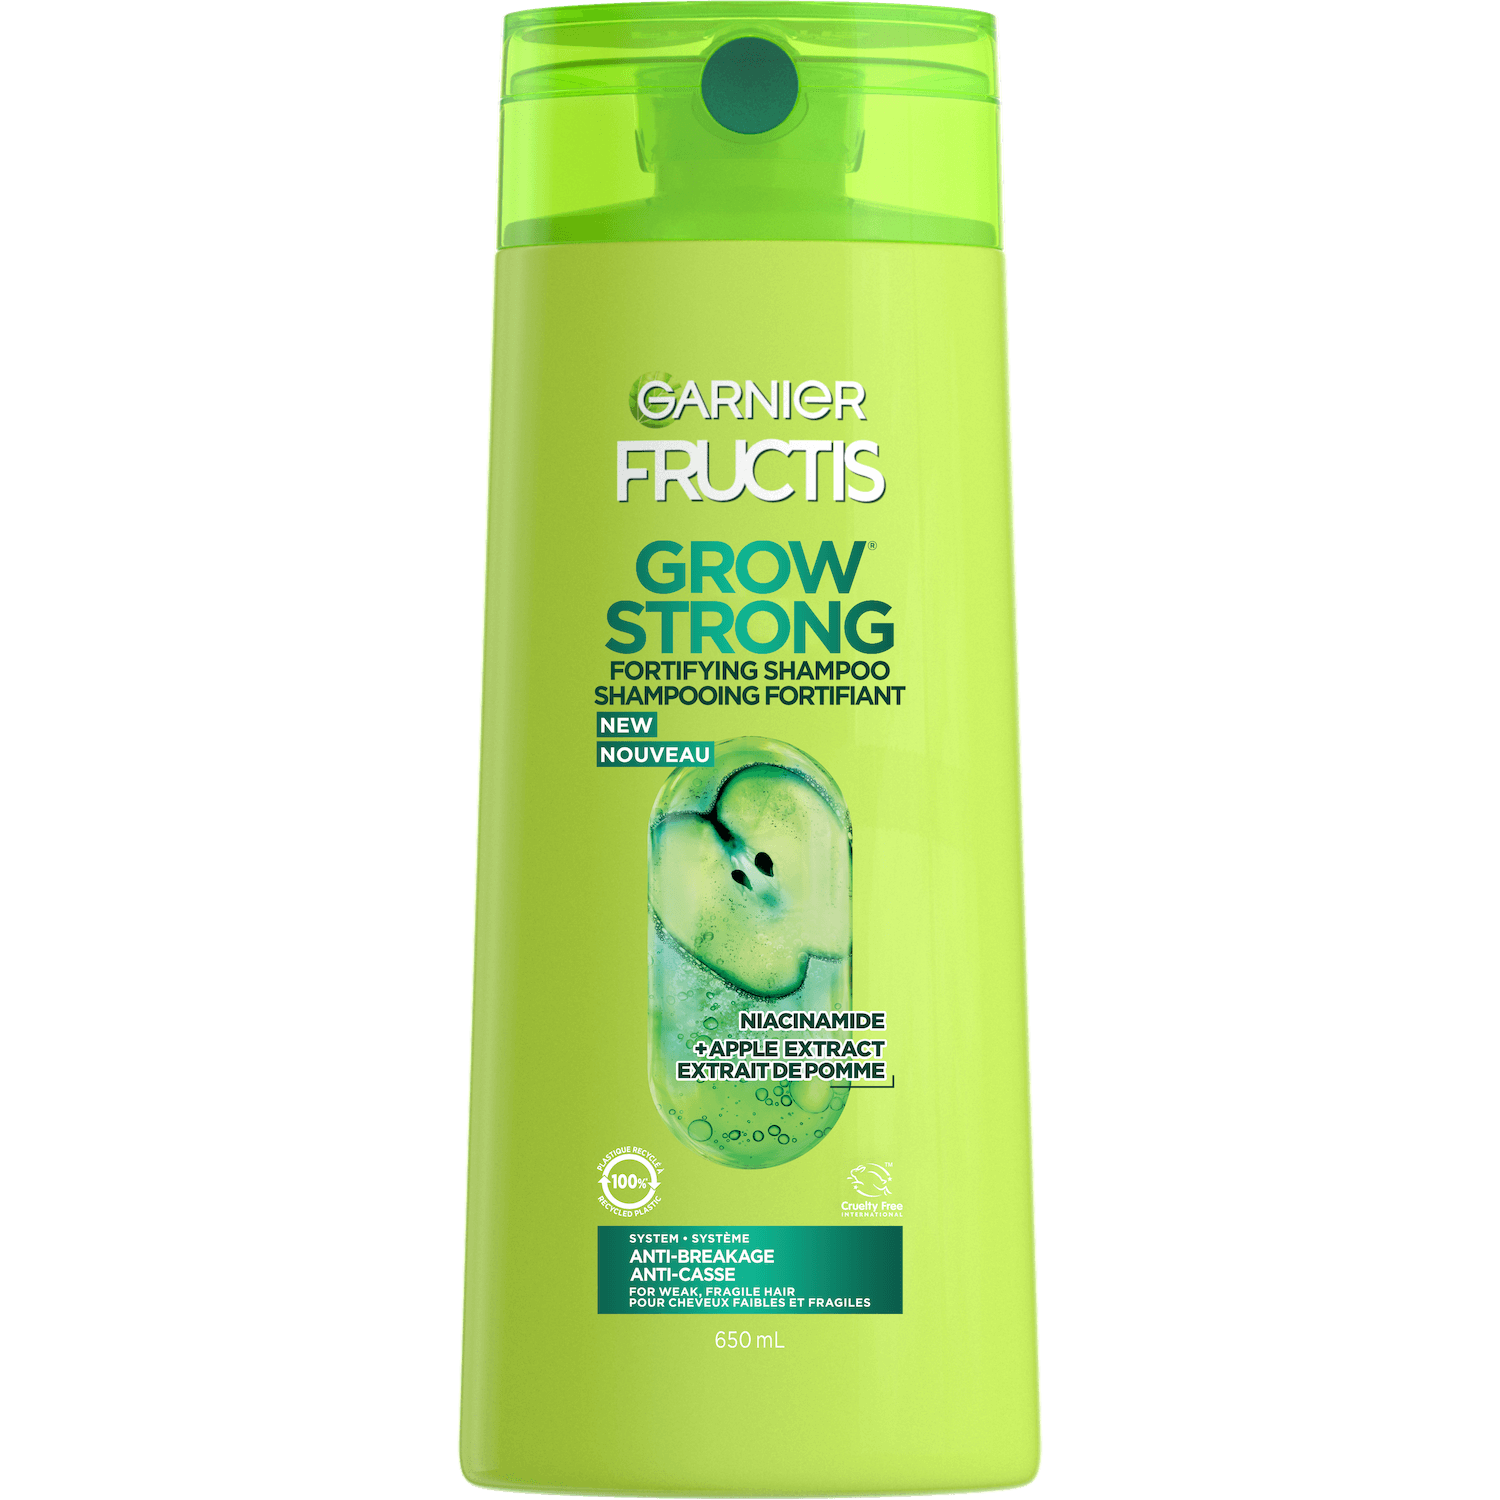 GAR 3D PKG Fructis Reno 2022 GrowStrong Shampoo Front 650mL